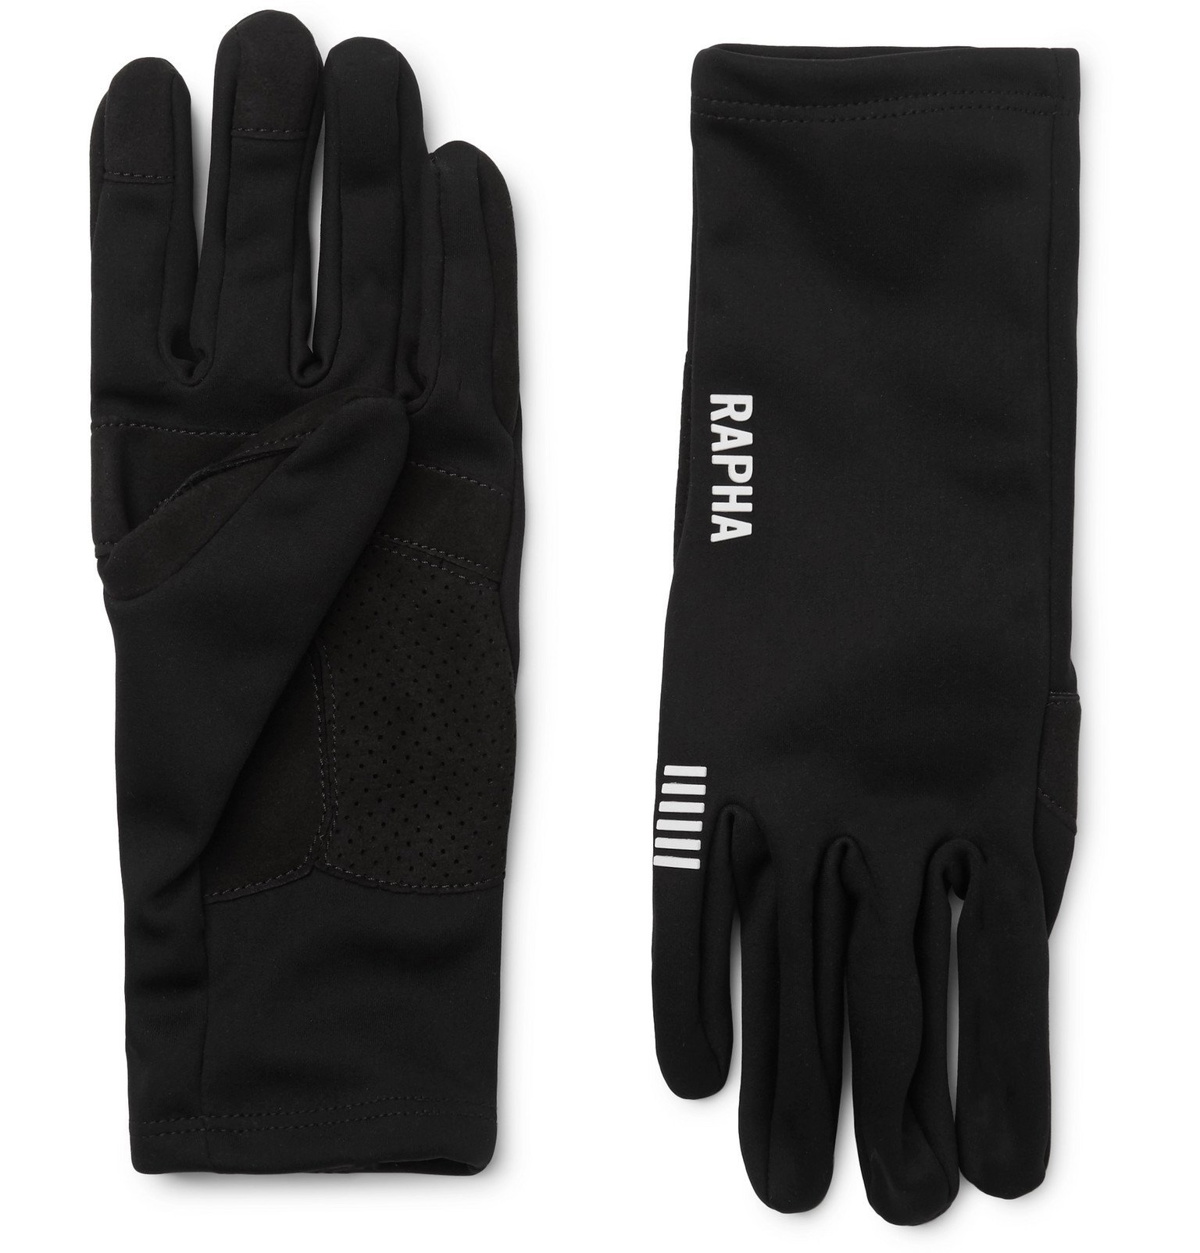 Black Pro Team Winter gloves, rapha